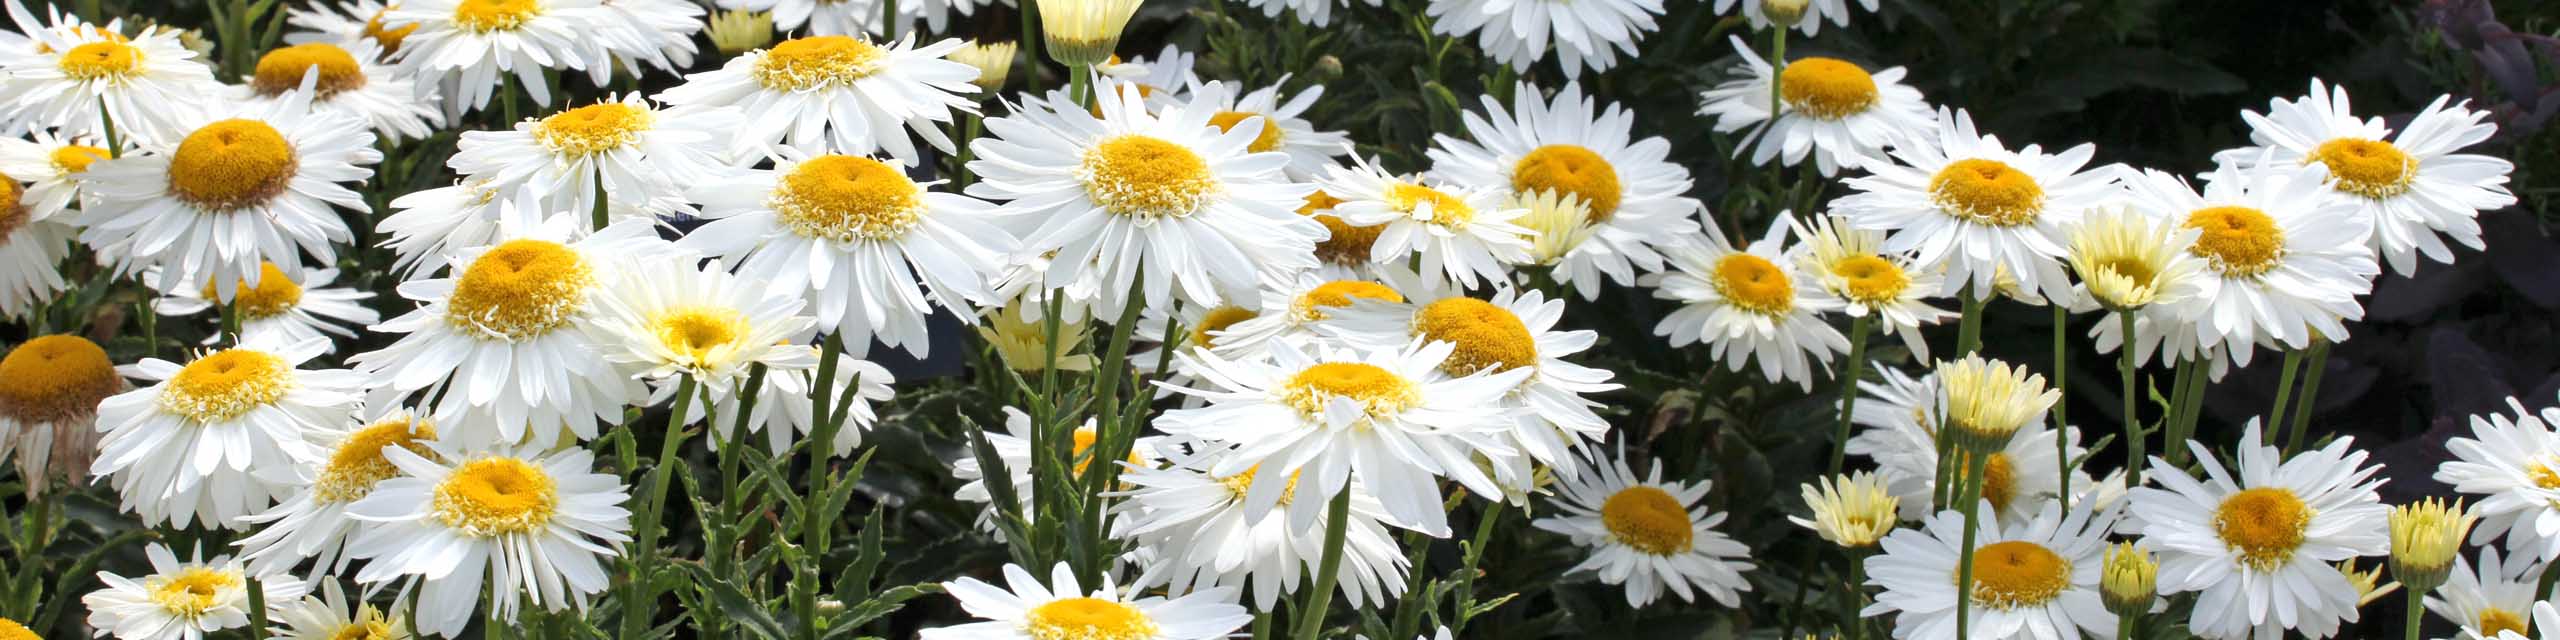 Flower bed full of white double petaled shasta daisies.